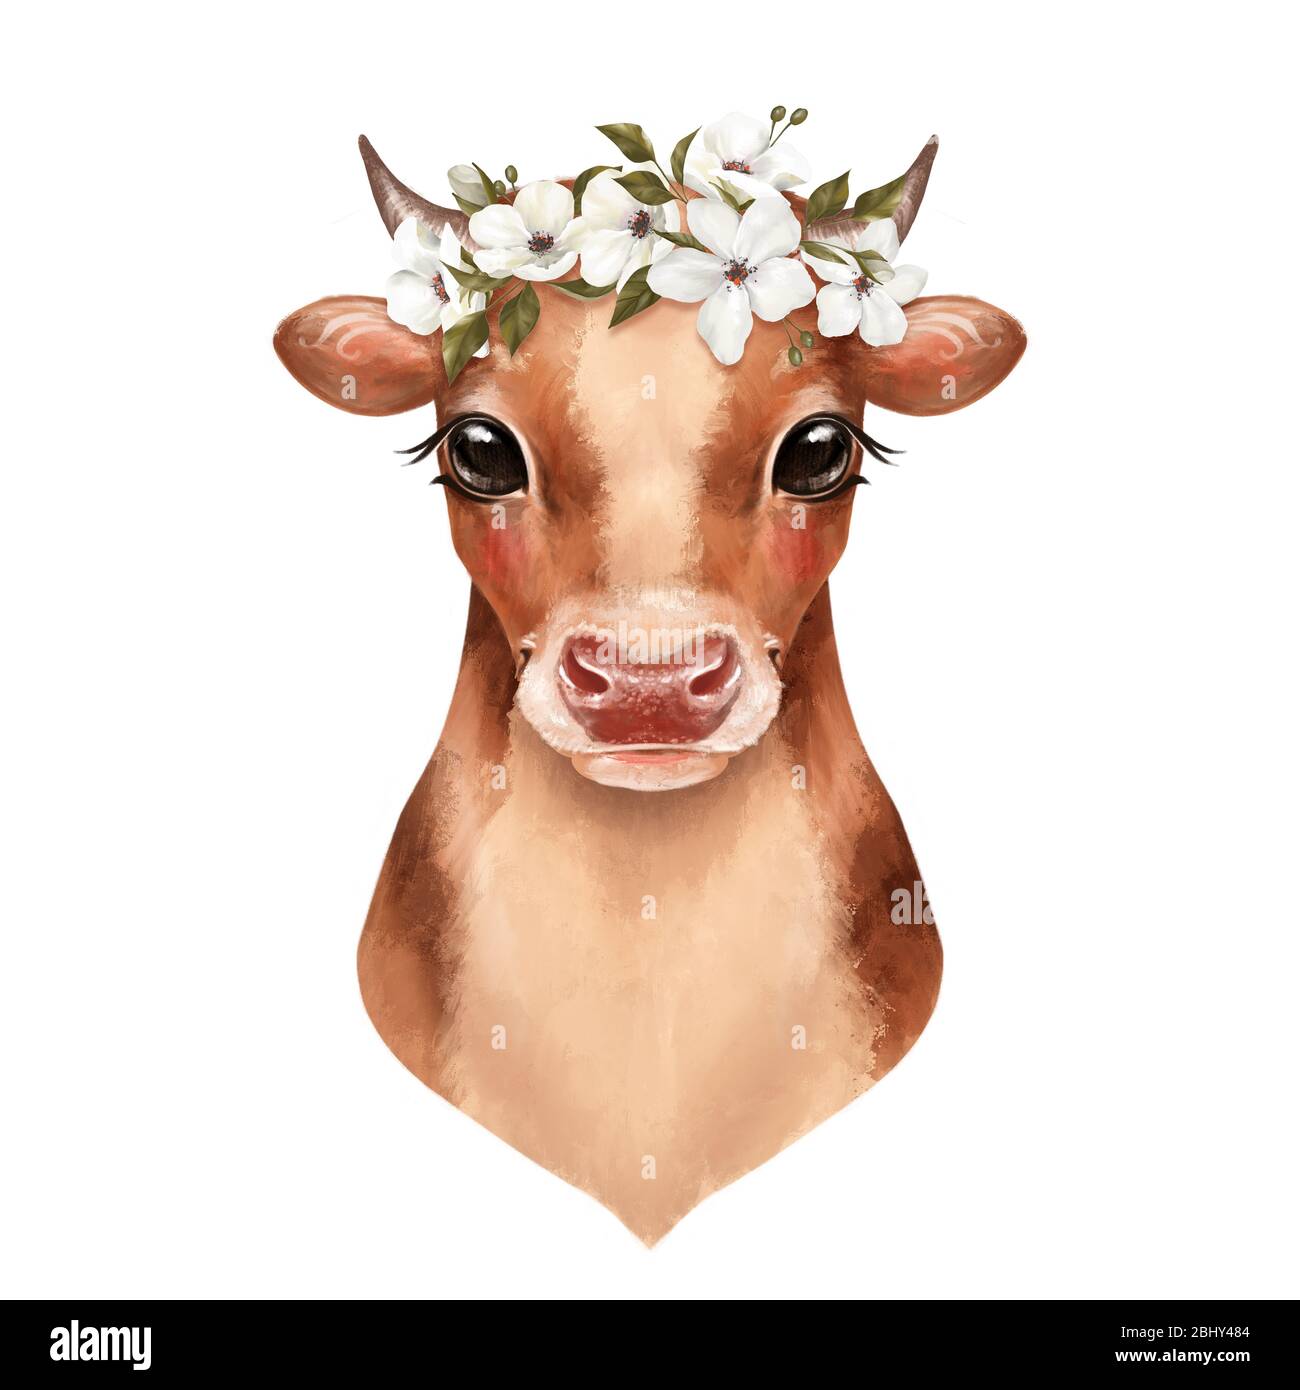 Cute cow illustration. Farms animal. Stock Photo